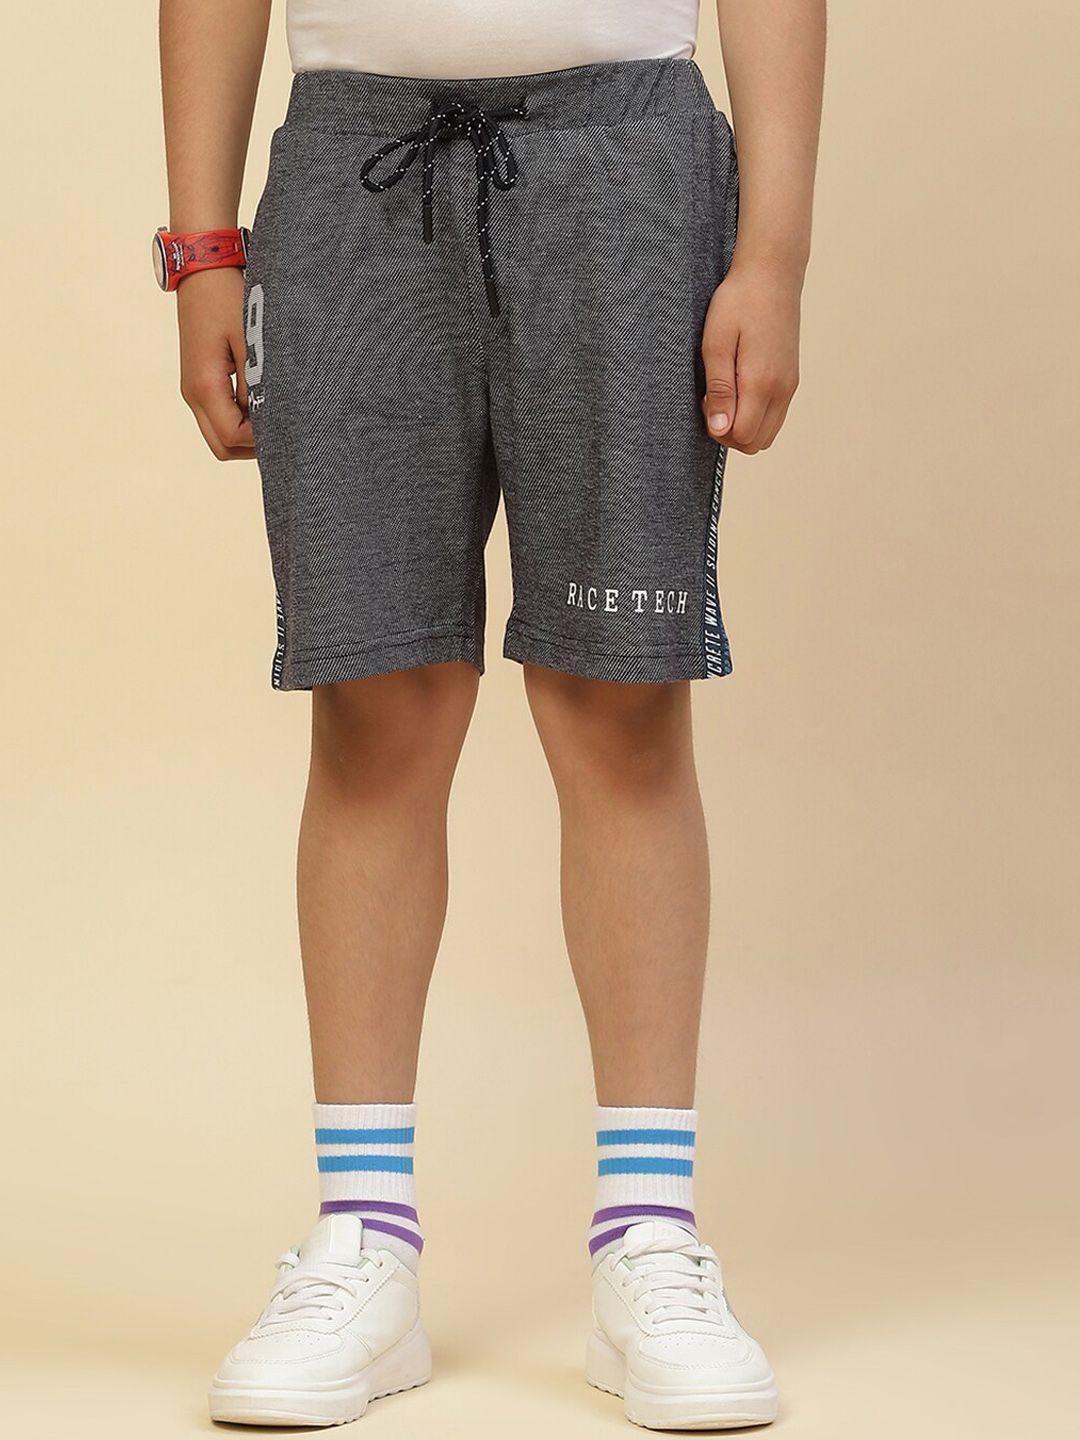 monte-carlo-boys-micro-ditsy-printed-shorts